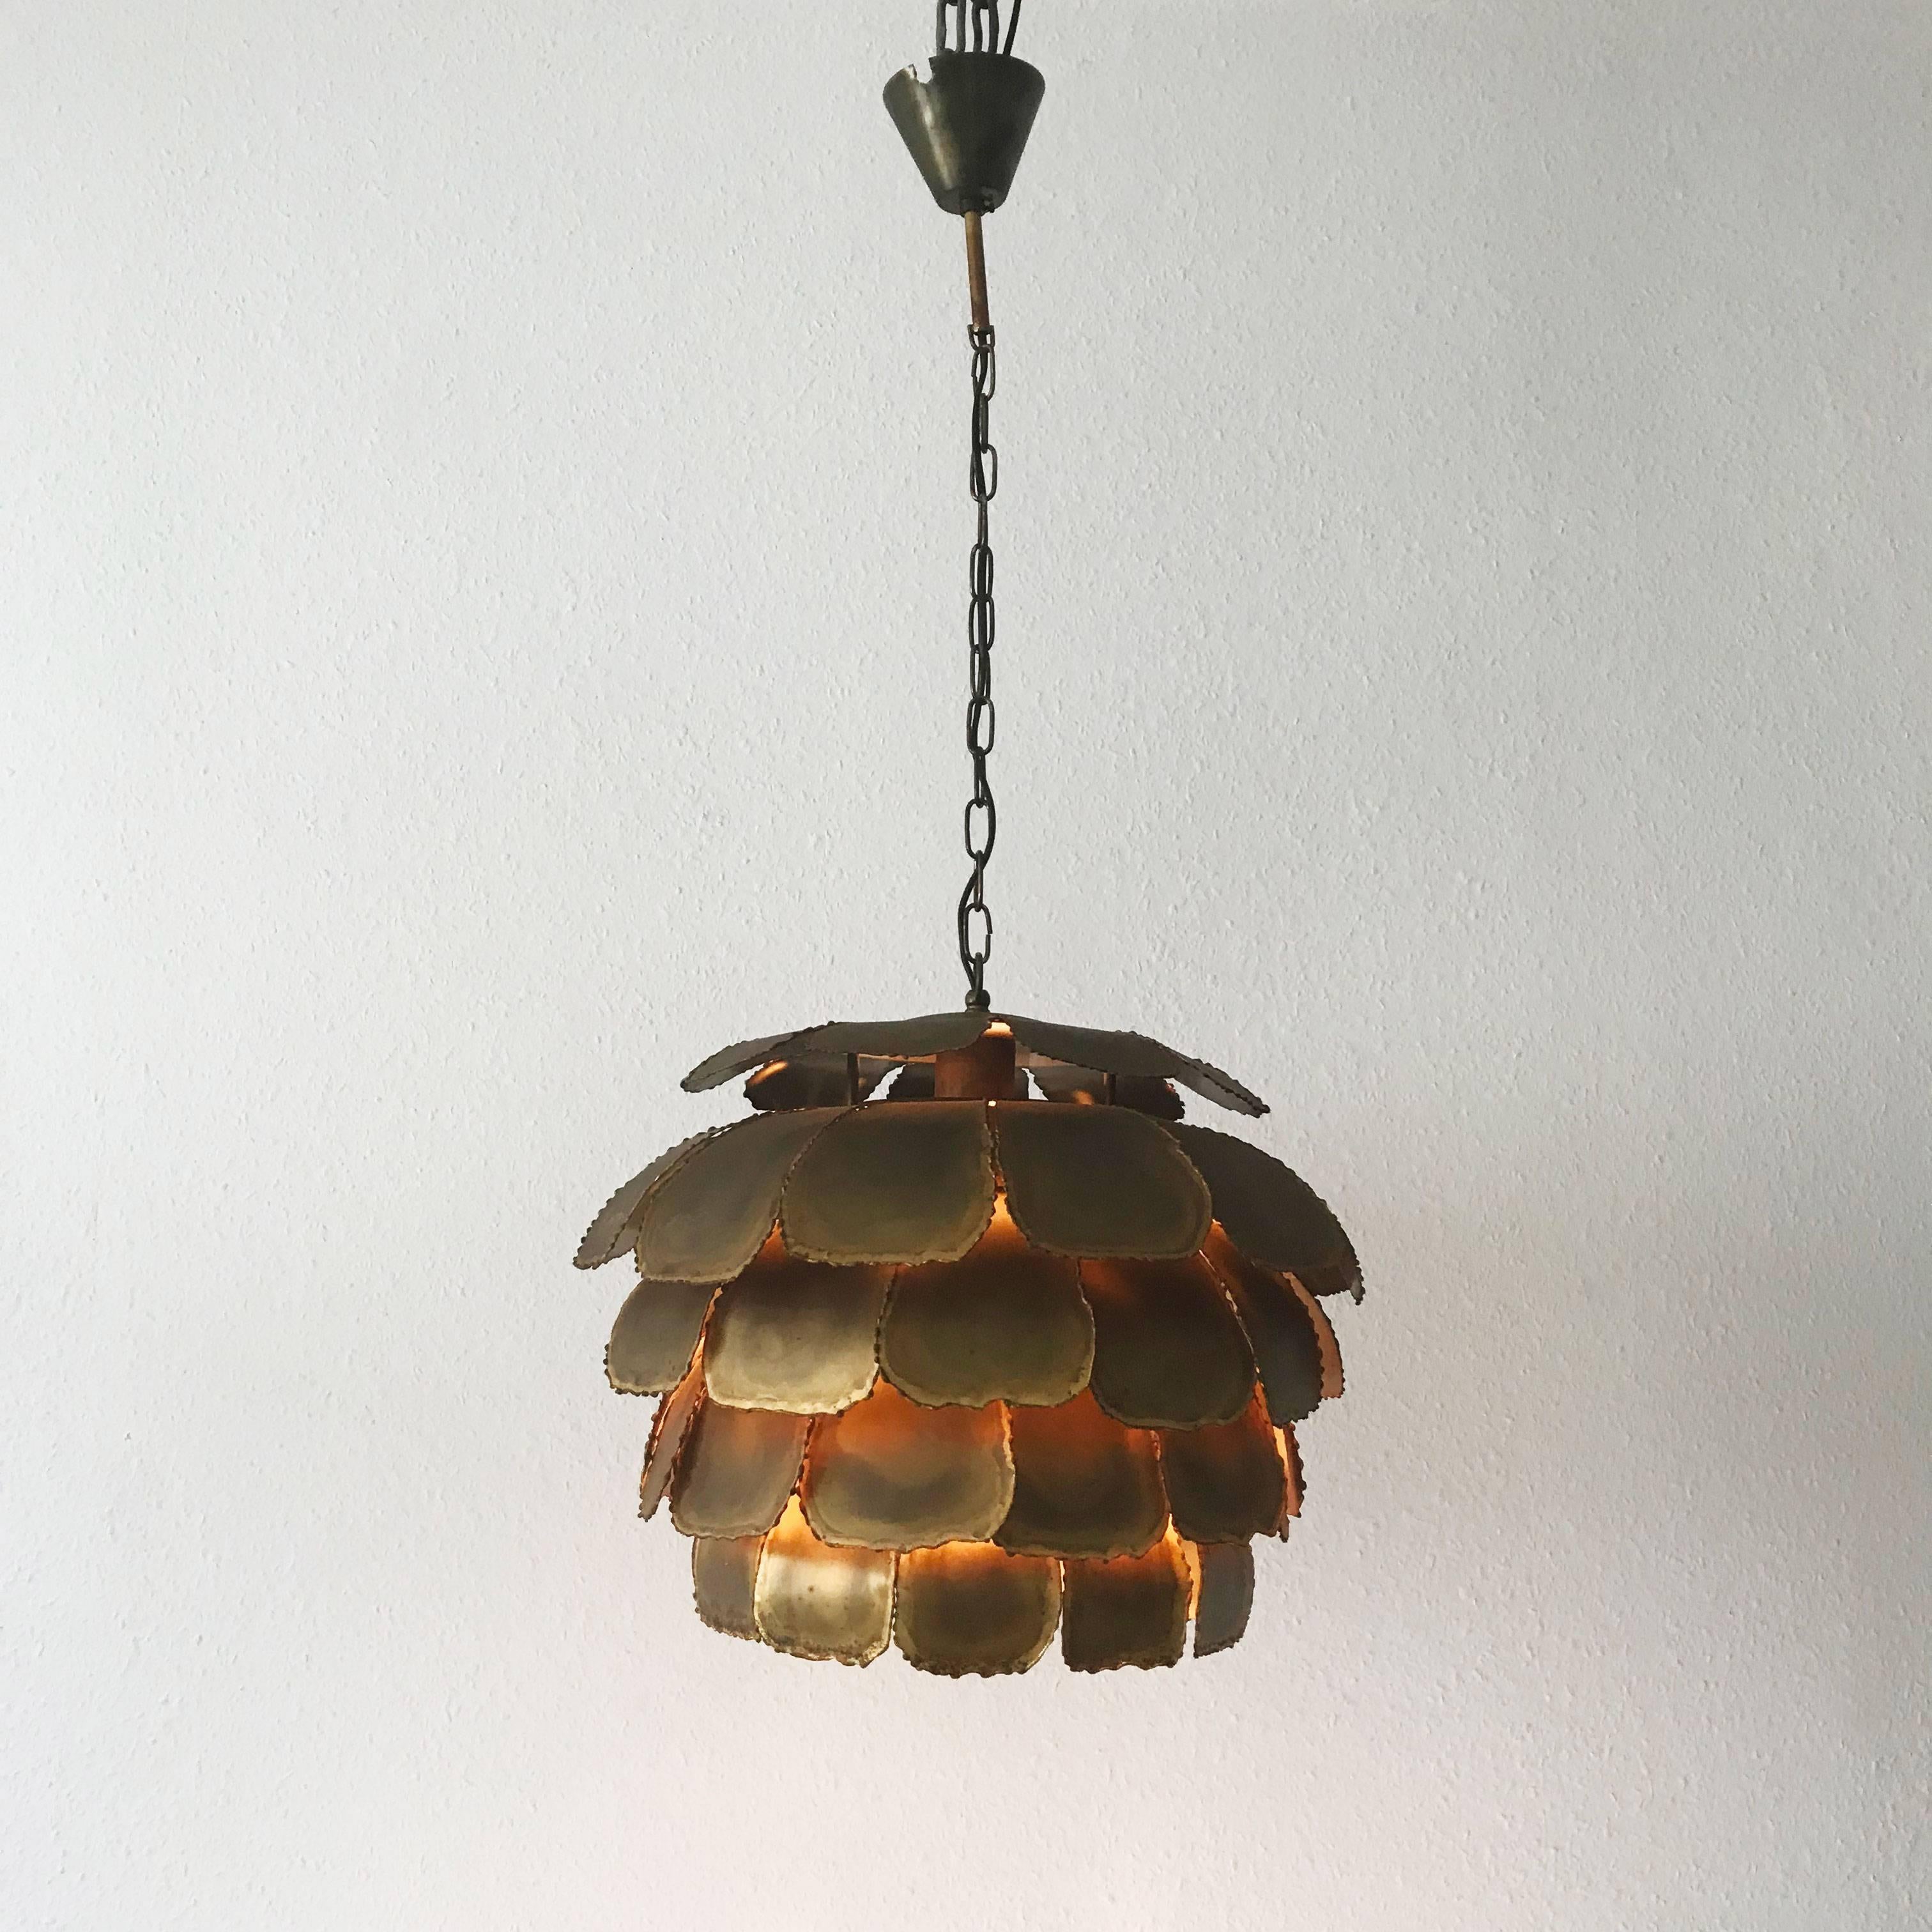 Danish Pendant Lamp Artichoke by Svend Aage Holm Sorensen for Holm Sørensen, 1960s